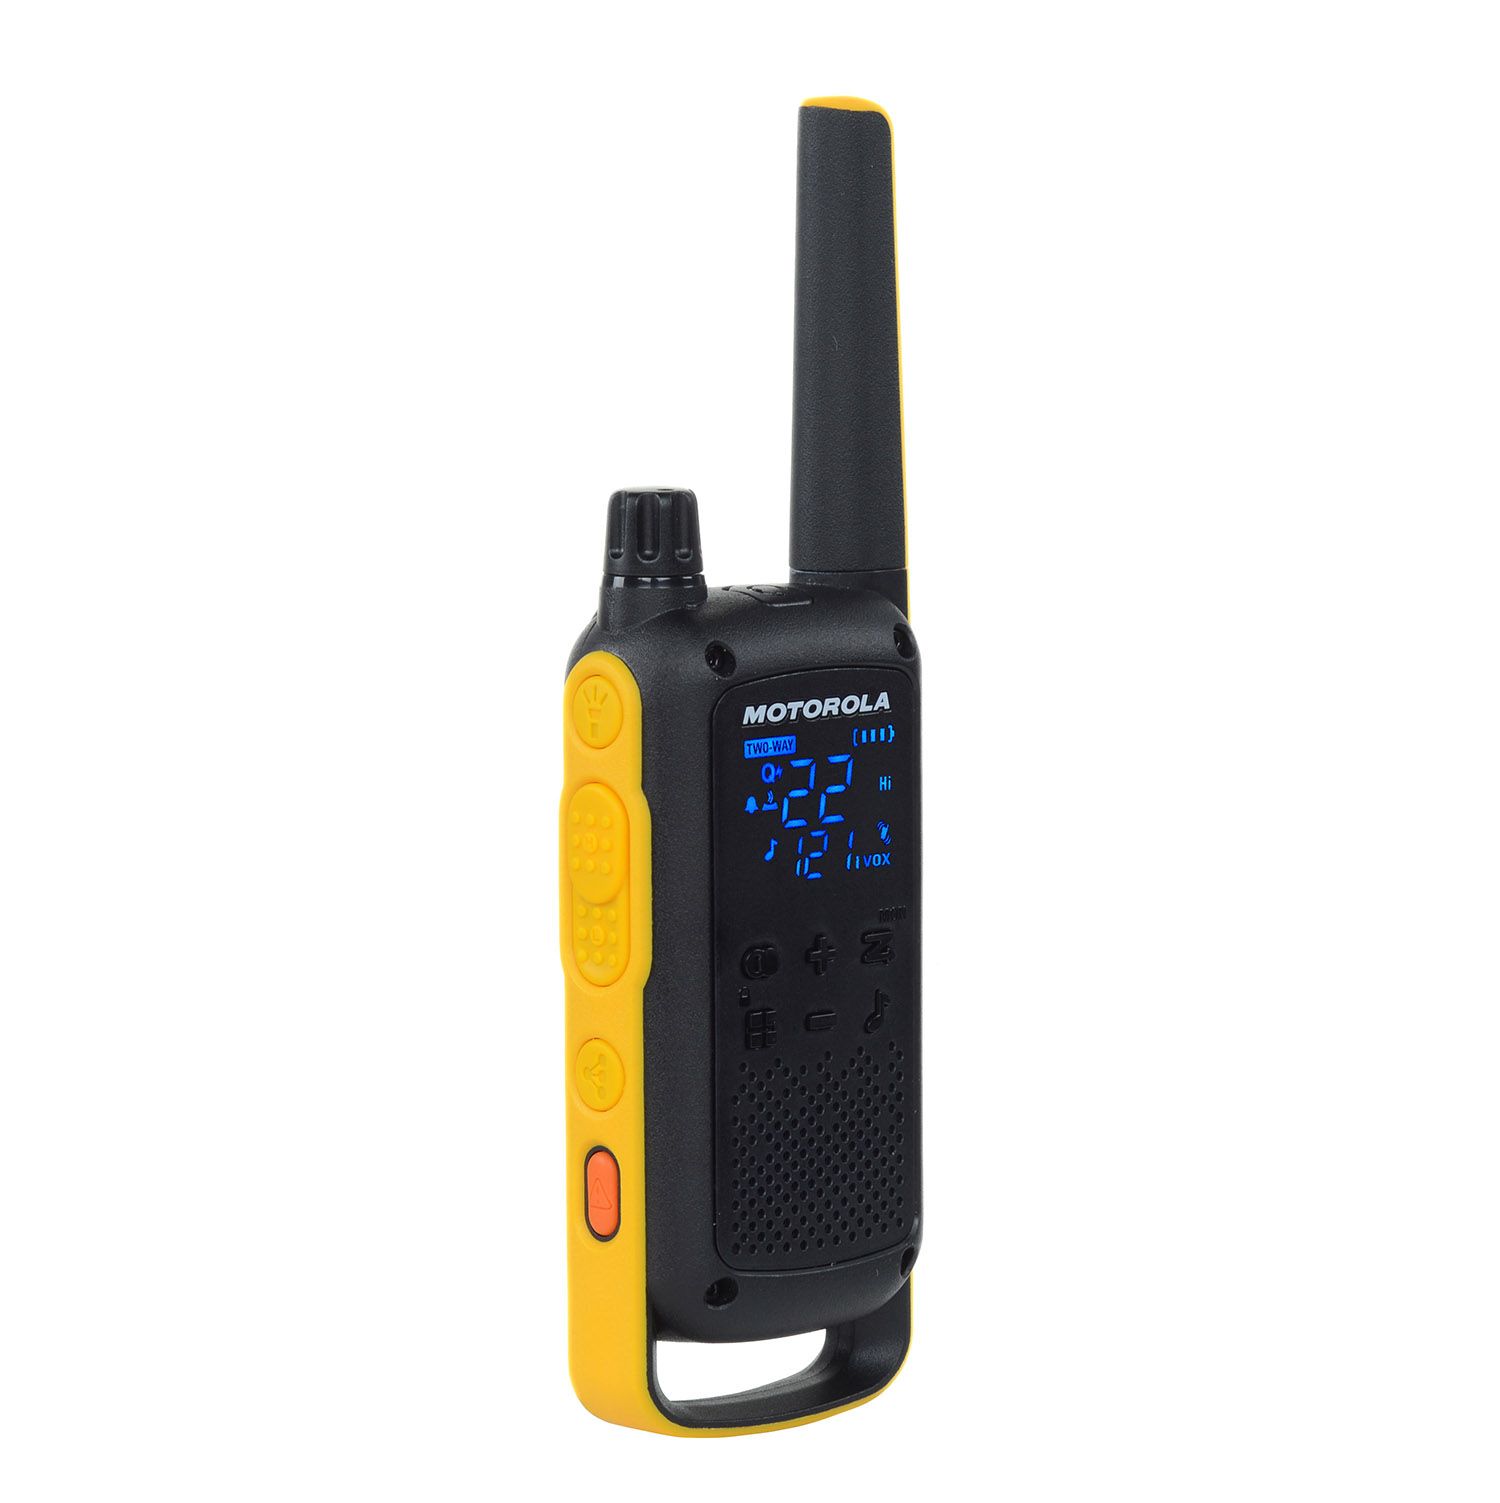 Motorola Solutions Talkabout® T465 Two-Way Radios, Green/Black - 2